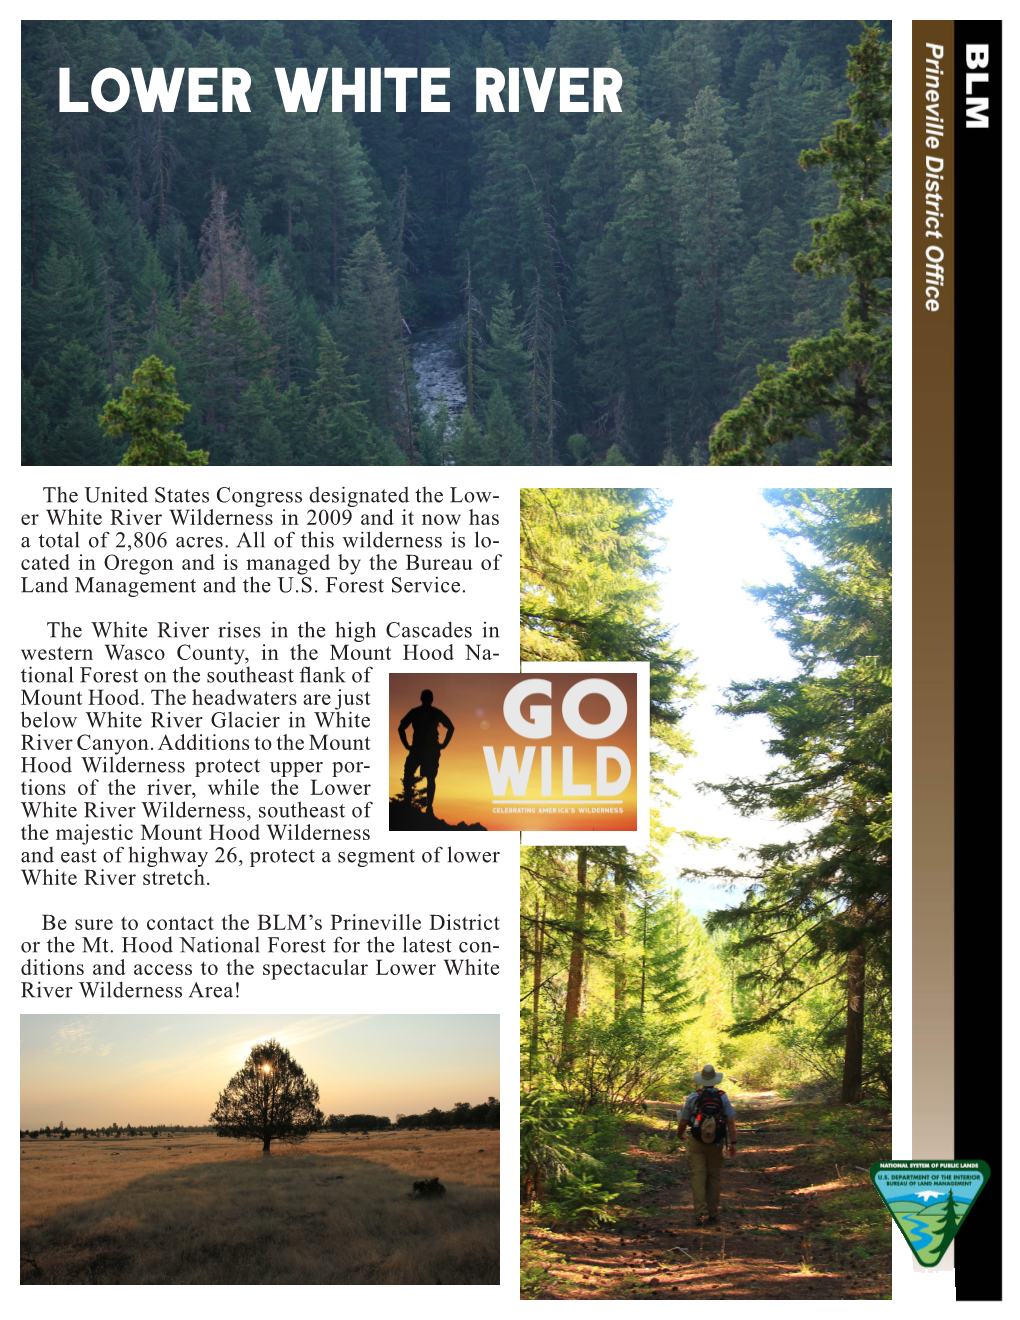 Lower White River Wilderness Area Brochure